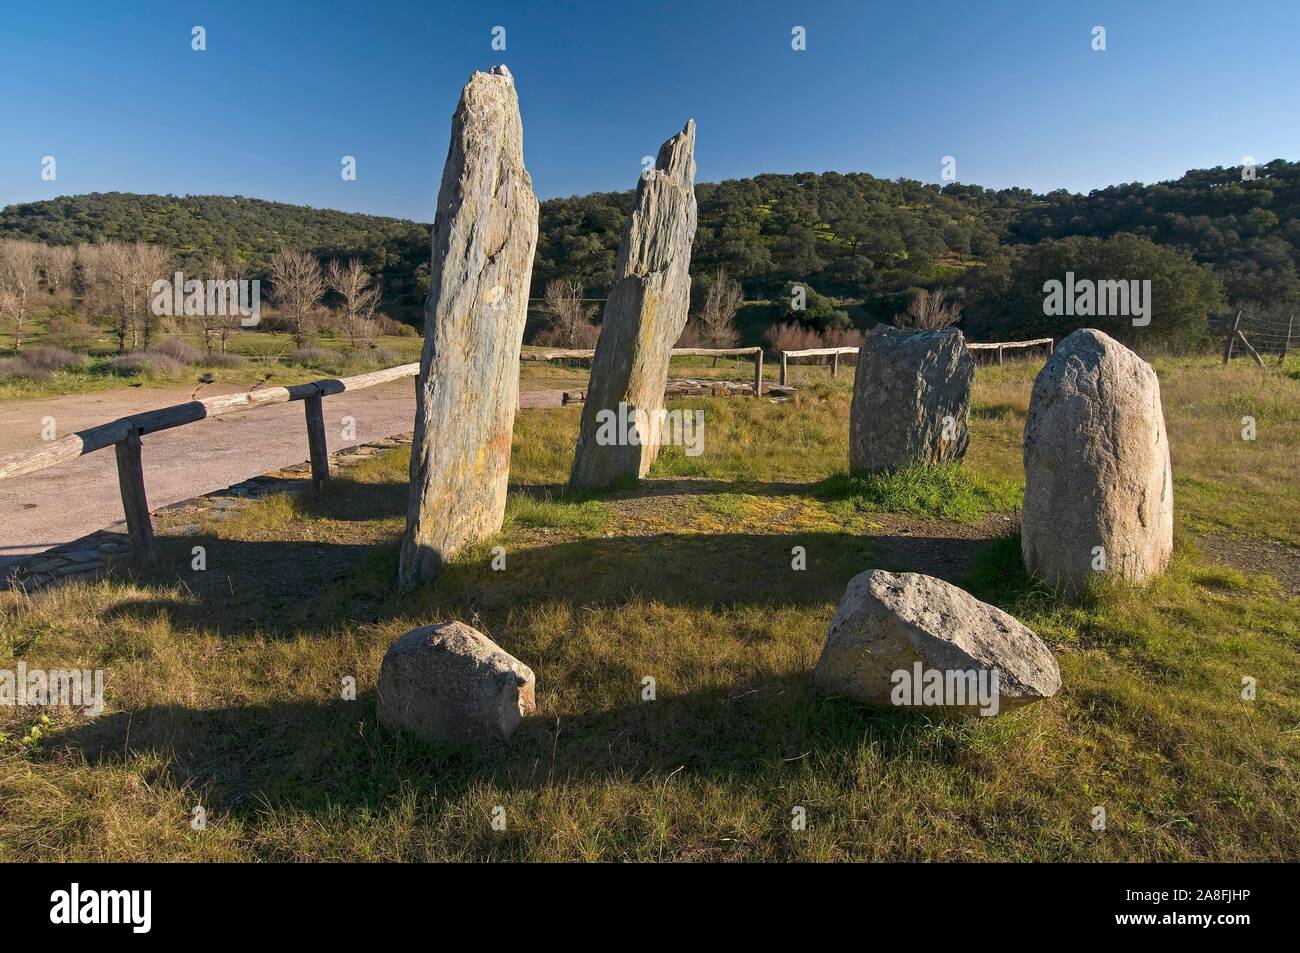 Cromlech La Pasada del Abad -betwen 3000 and 2500 BC, Megalithic monument, Rosal de la Frontera, Huelva province, Region of Andalusia, Spain, Europe. Stock Photo